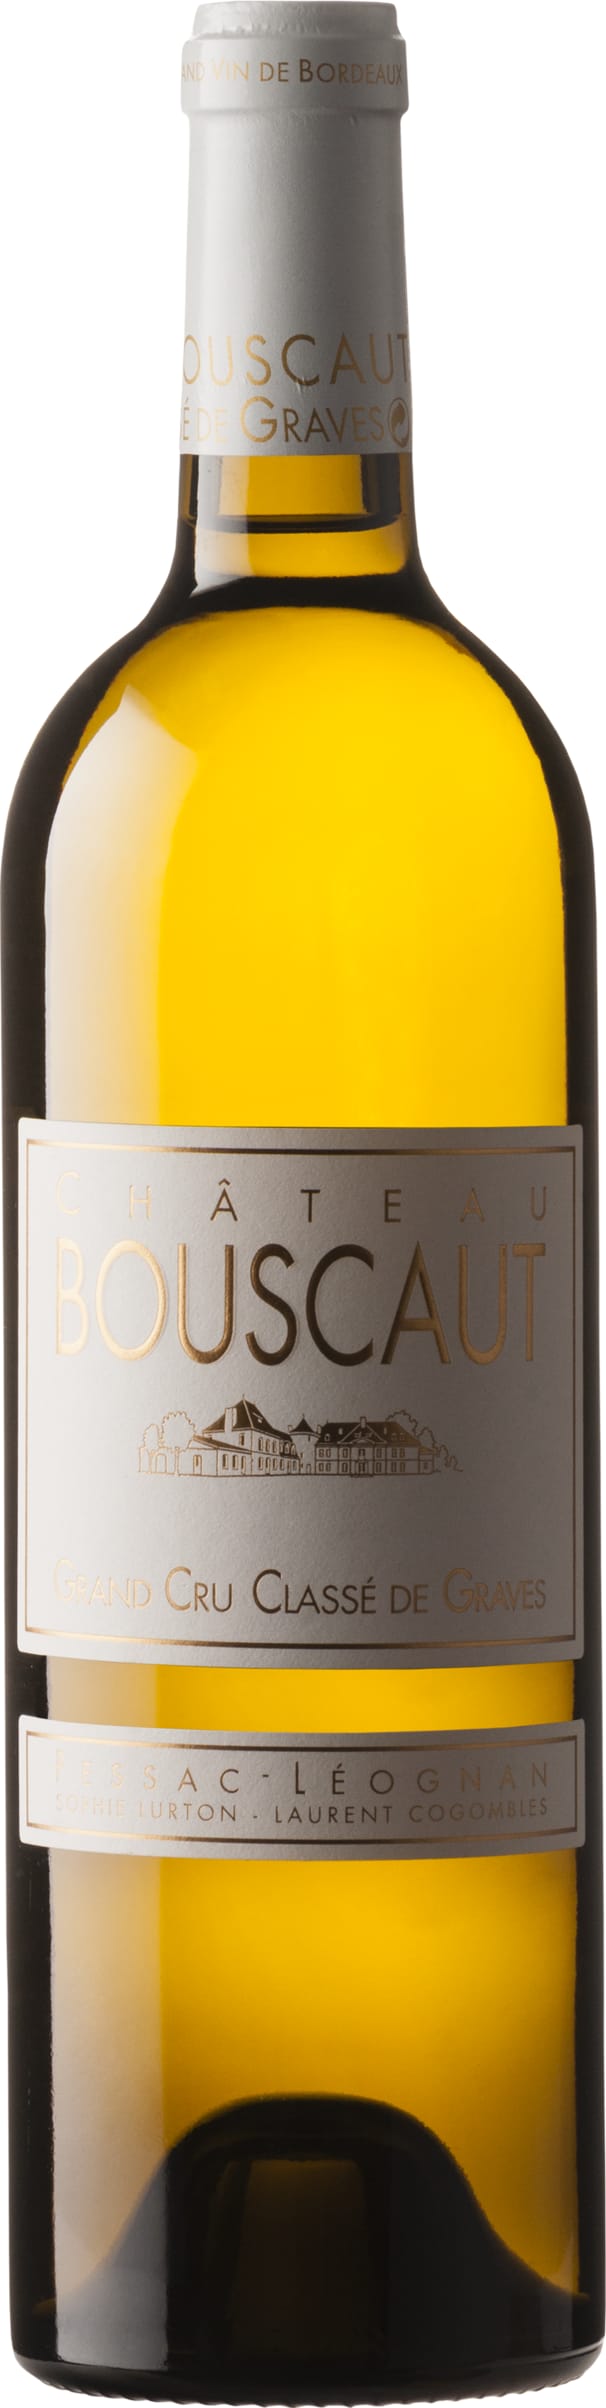 Chateau Bouscaut Pessac-Leognan Blanc, Cru Classe 2021 75cl - Buy Chateau Bouscaut Wines from GREAT WINES DIRECT wine shop